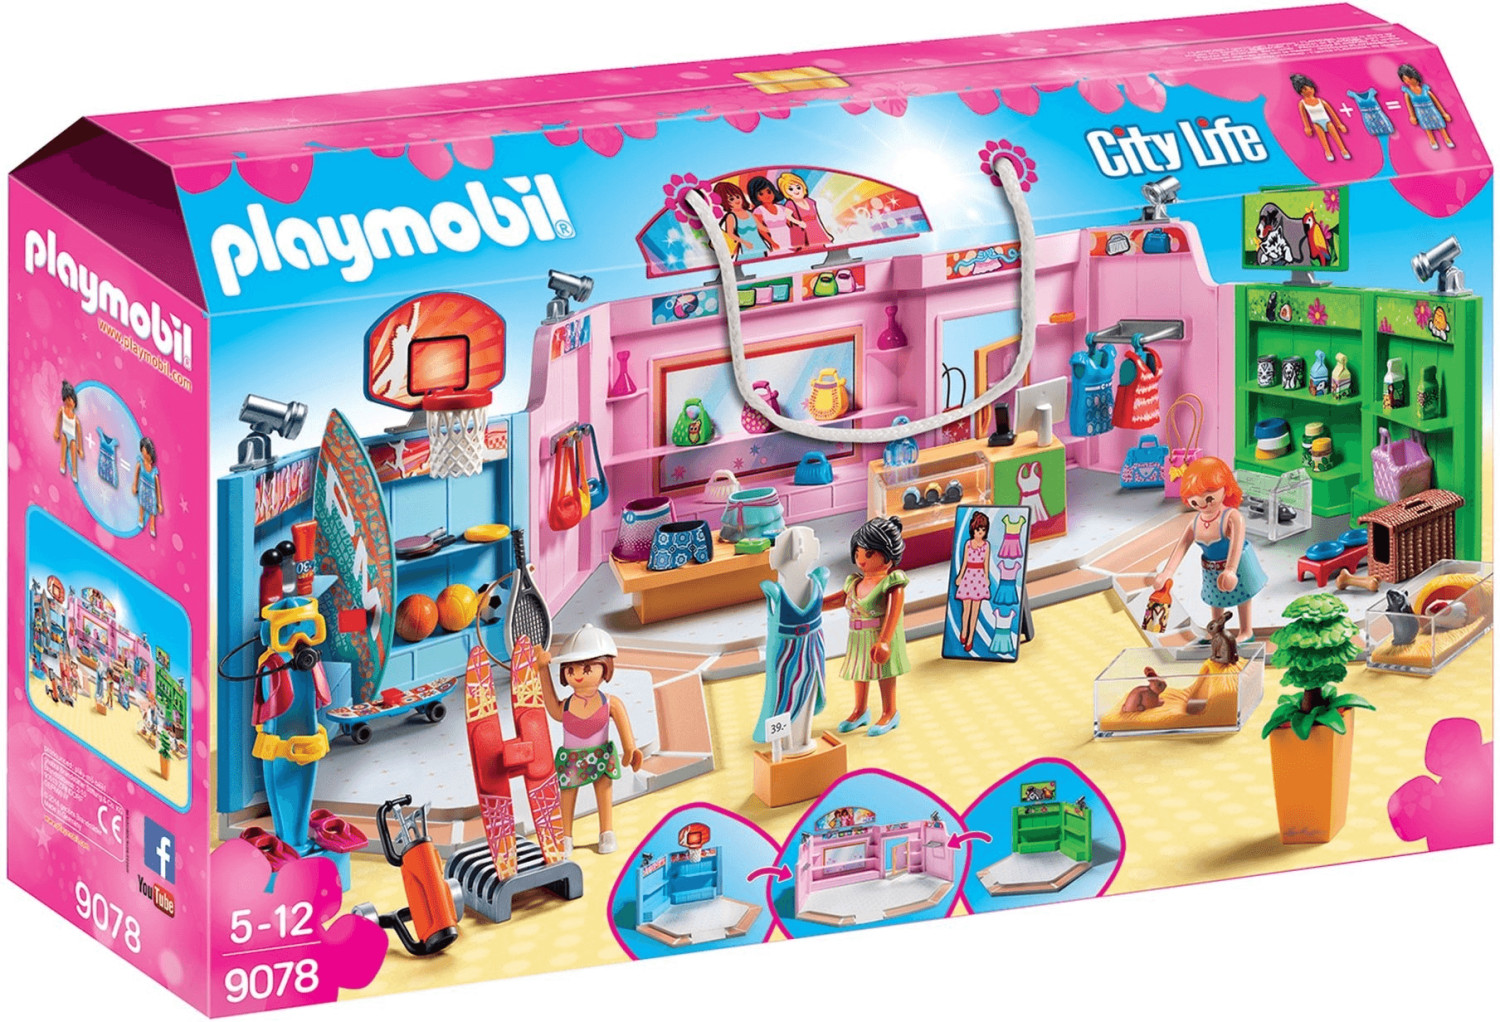 Playmobil City Life - Einkaufspassage (9078)